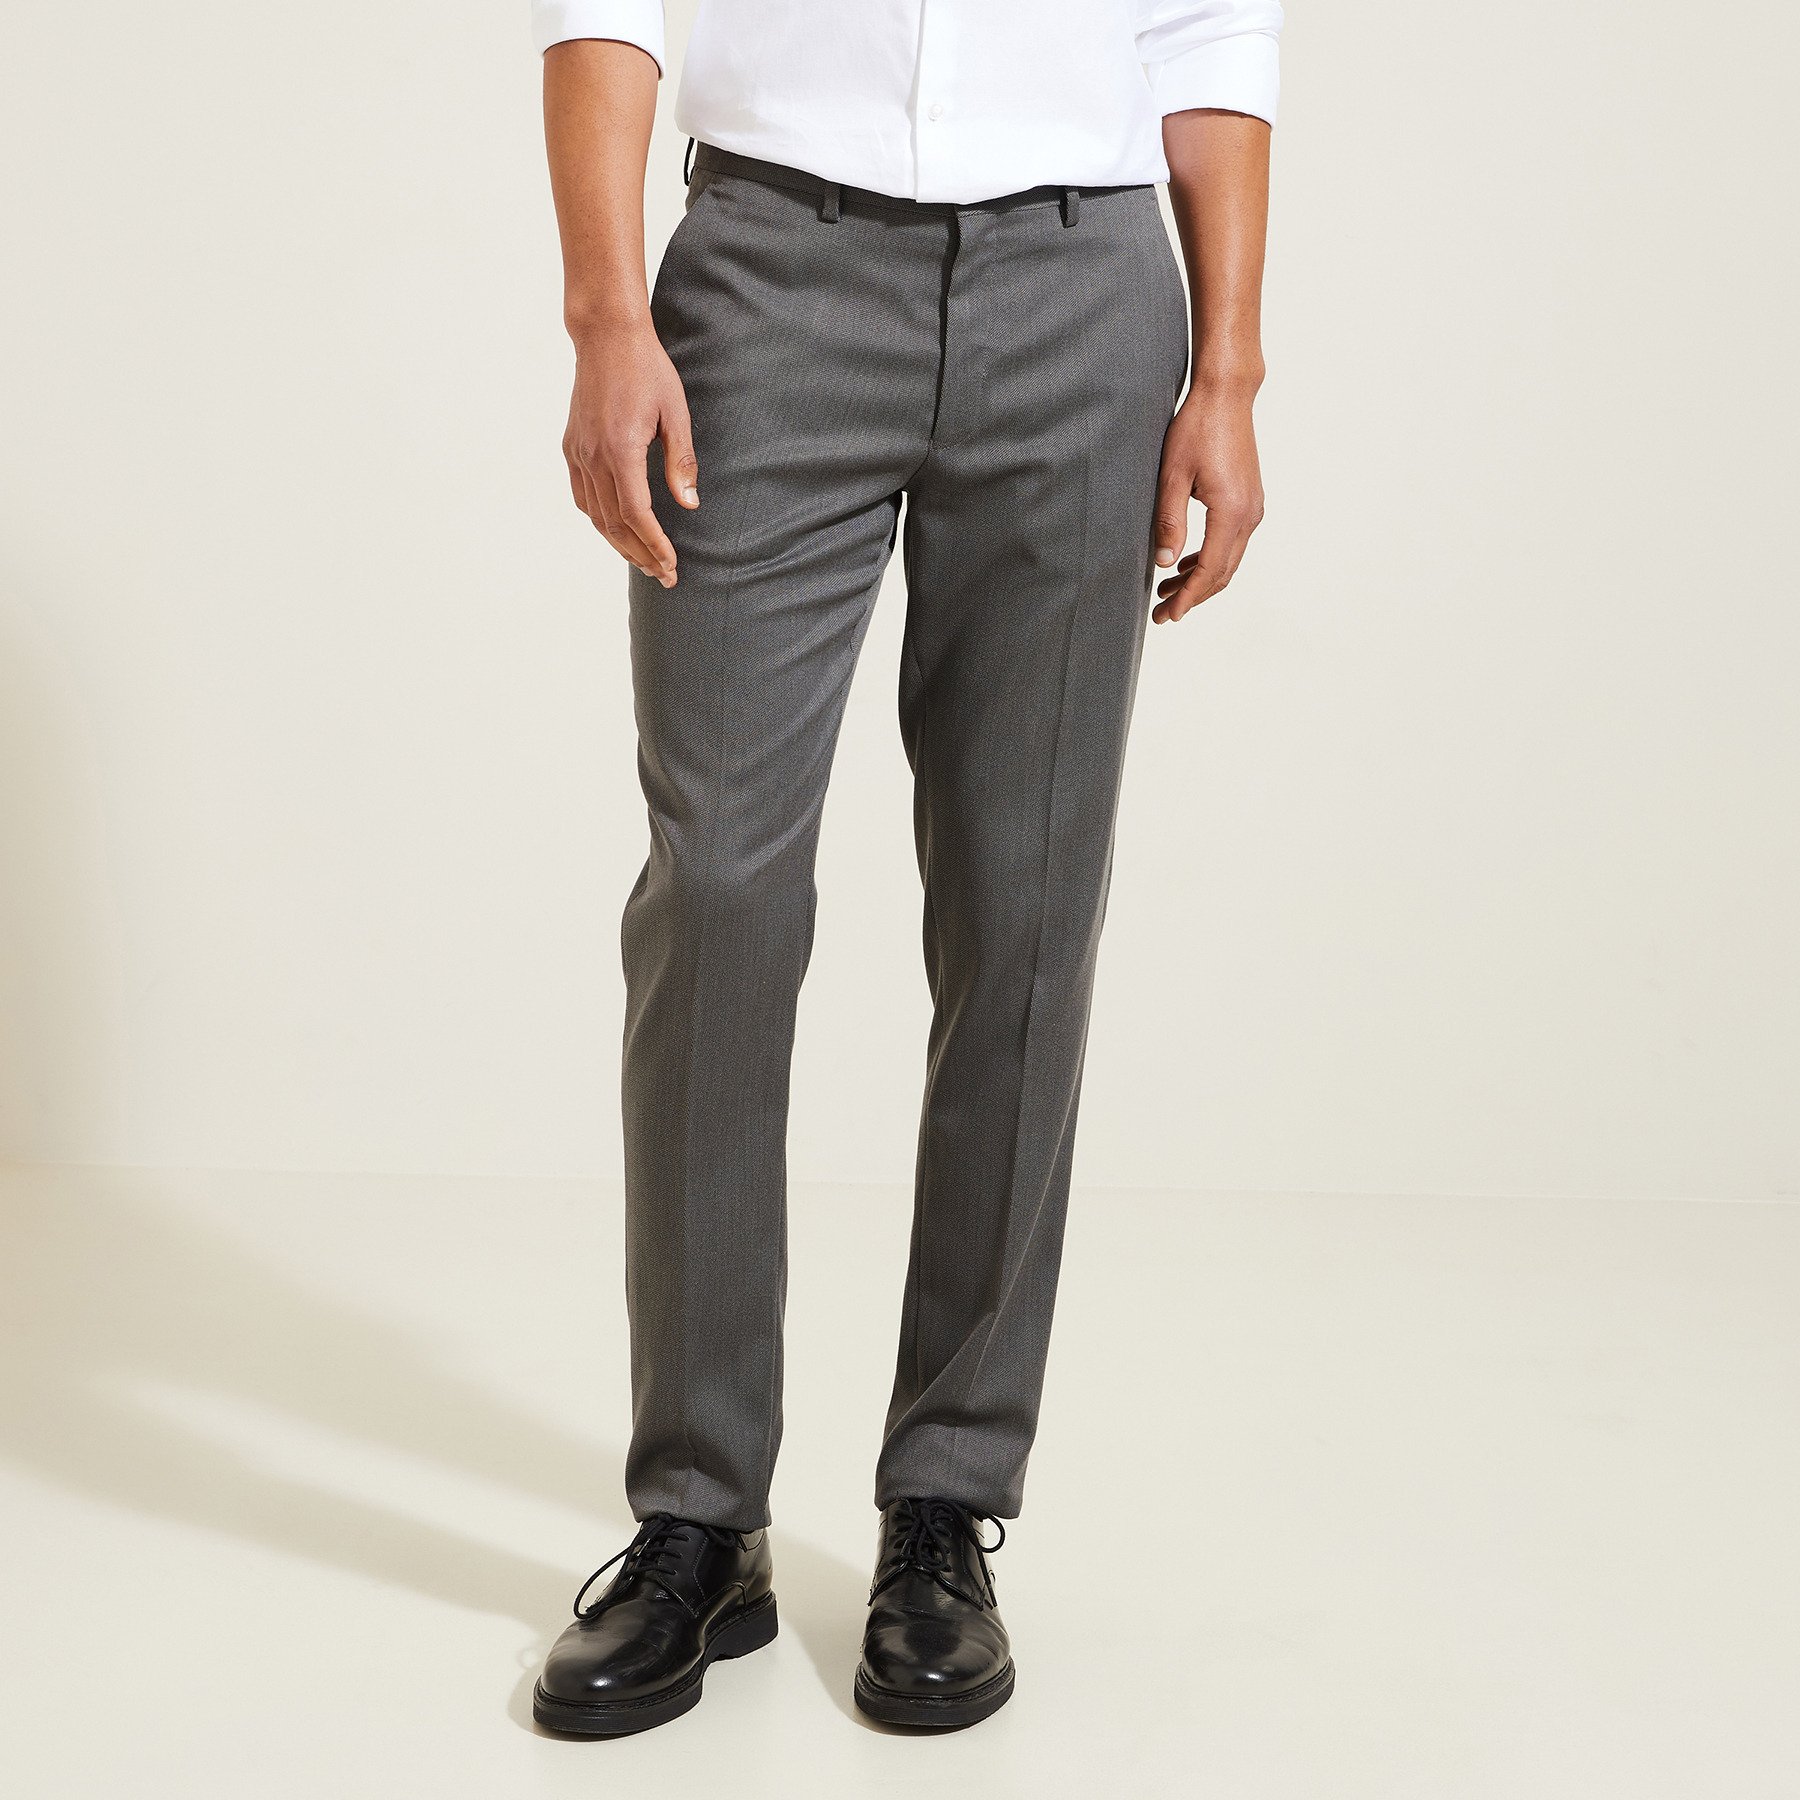 Pantalon de costume uni slim Gris 34 78% Polyester, 20% Viscose, 2% Elasthanne Homme